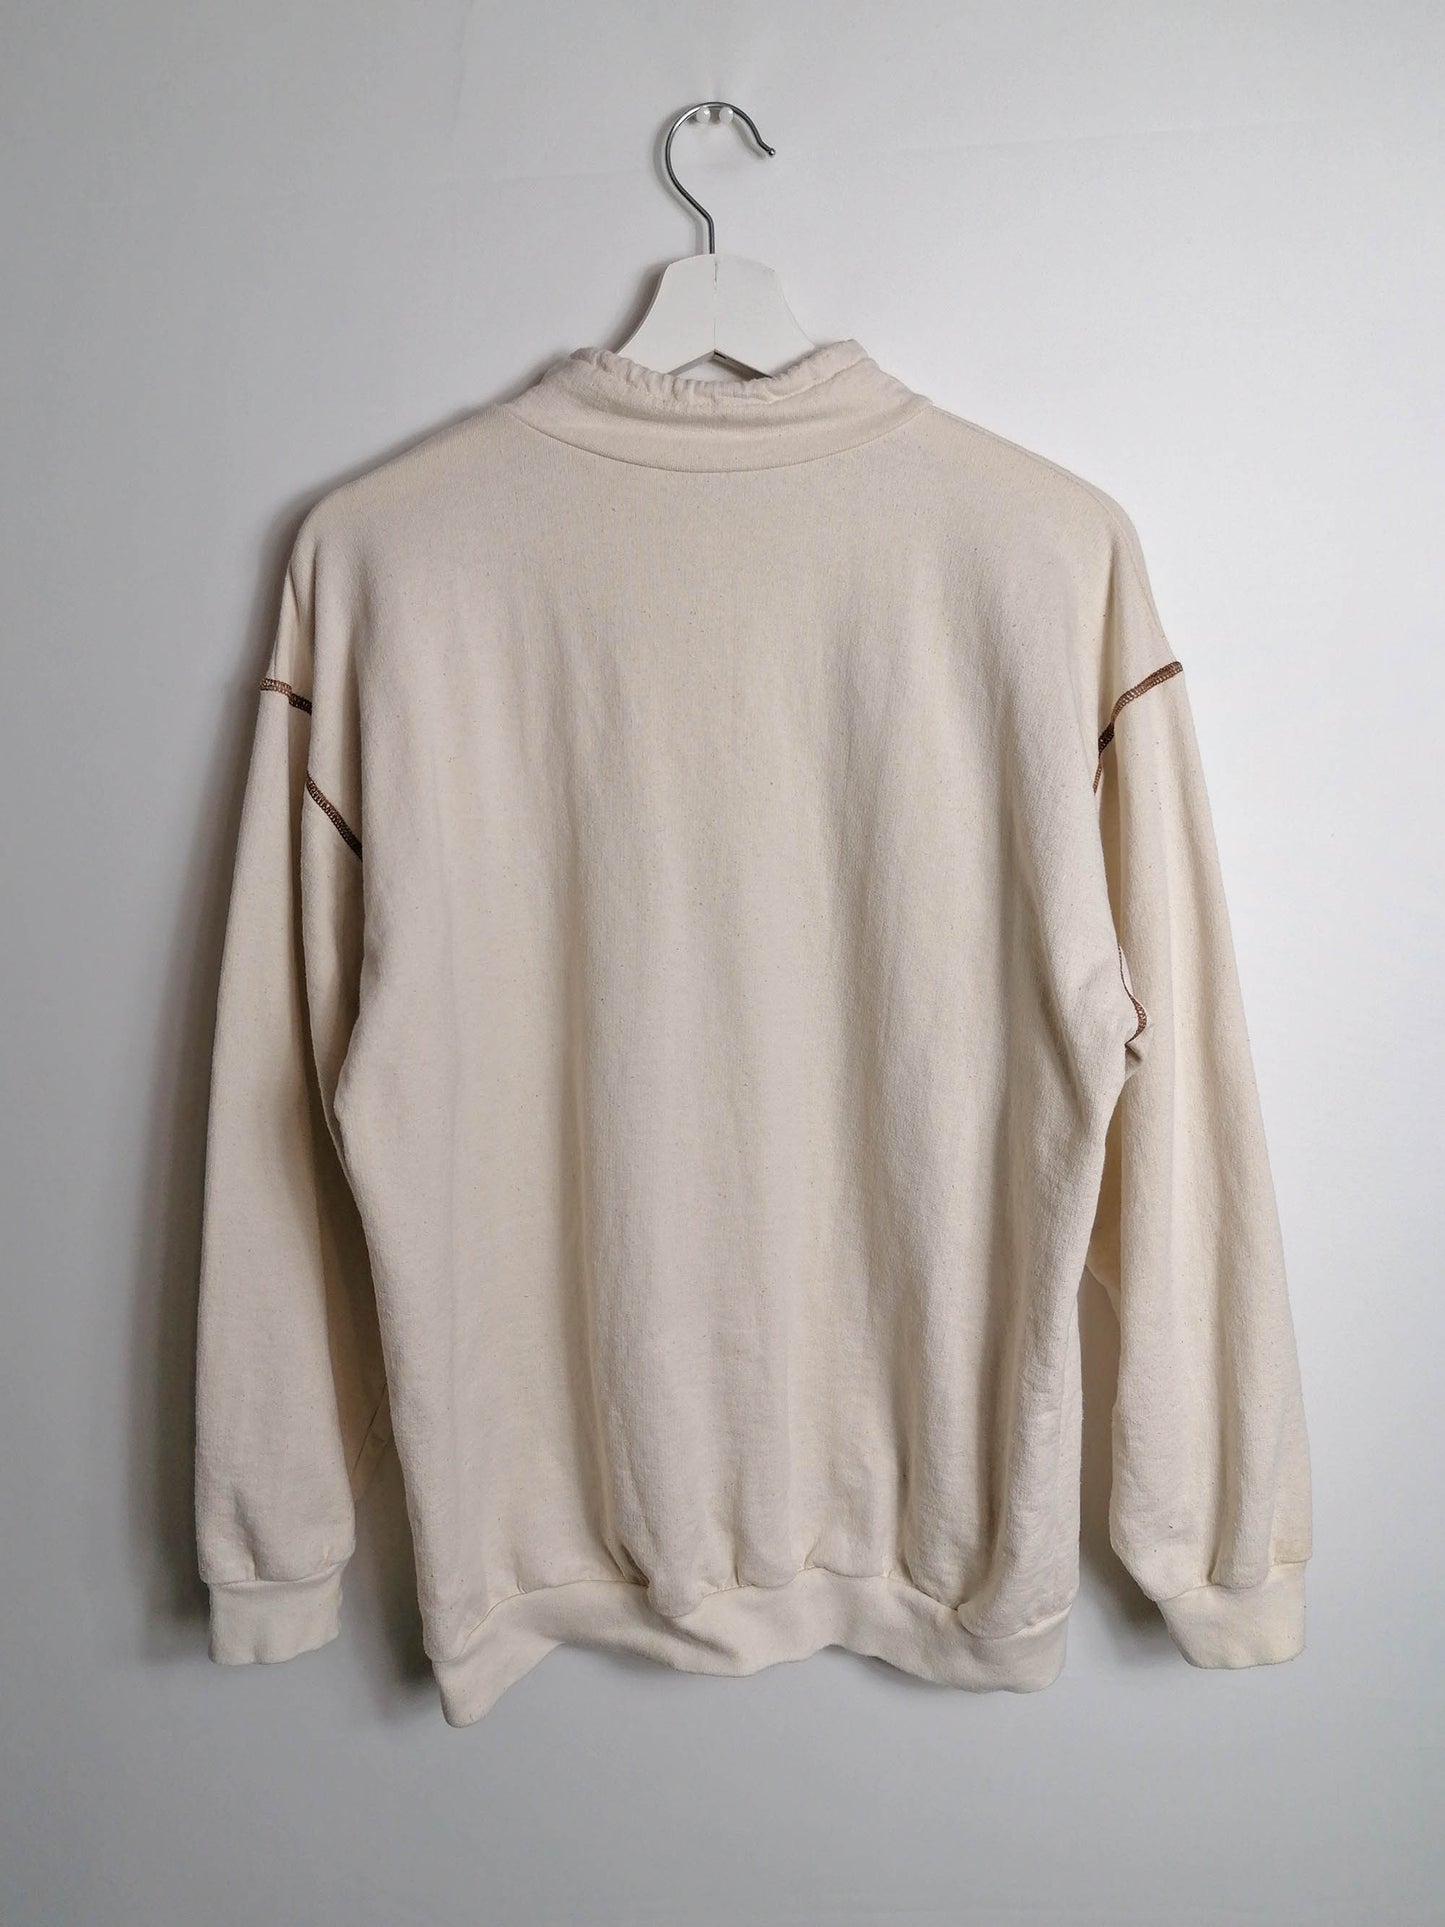 Mushrooms Print 80's Retro Sweatshirt - size S-M